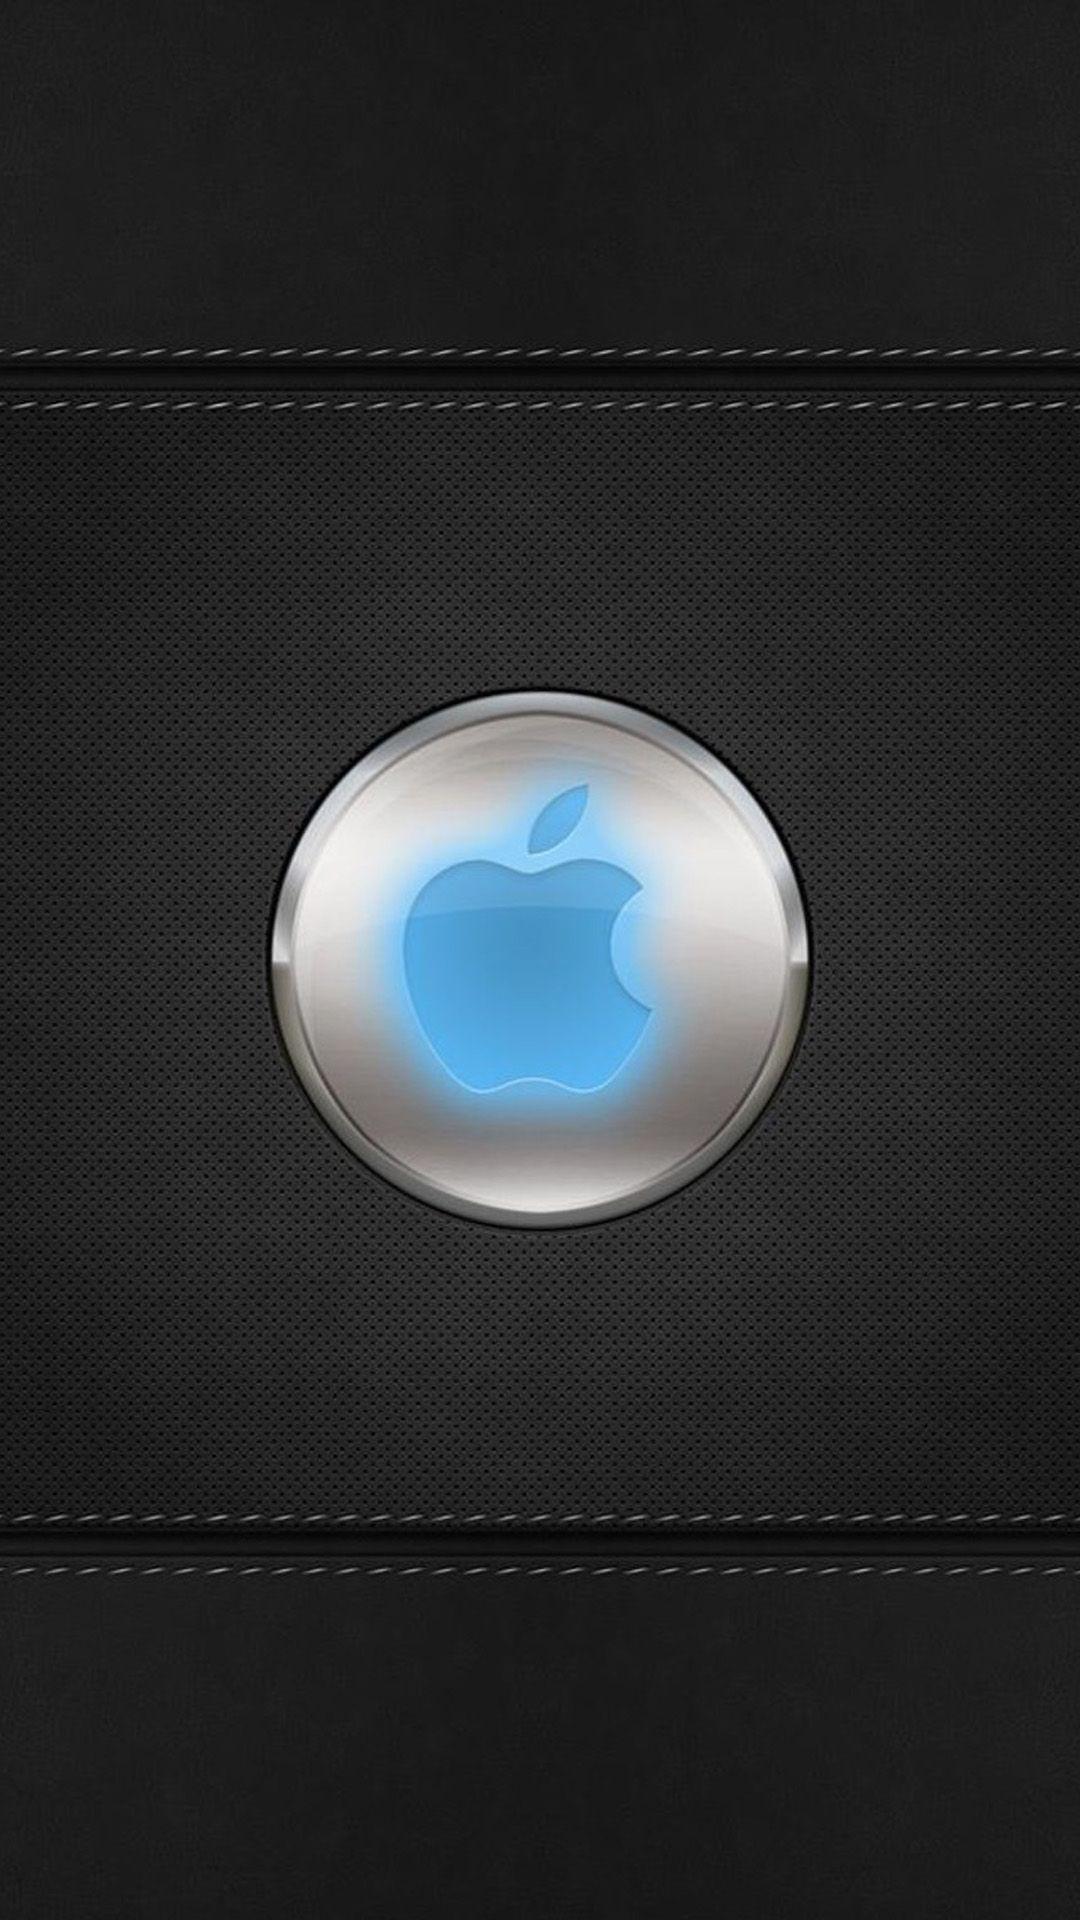 Apple Logo iPhone HD Wallpapers - Top Free Apple Logo iPhone HD